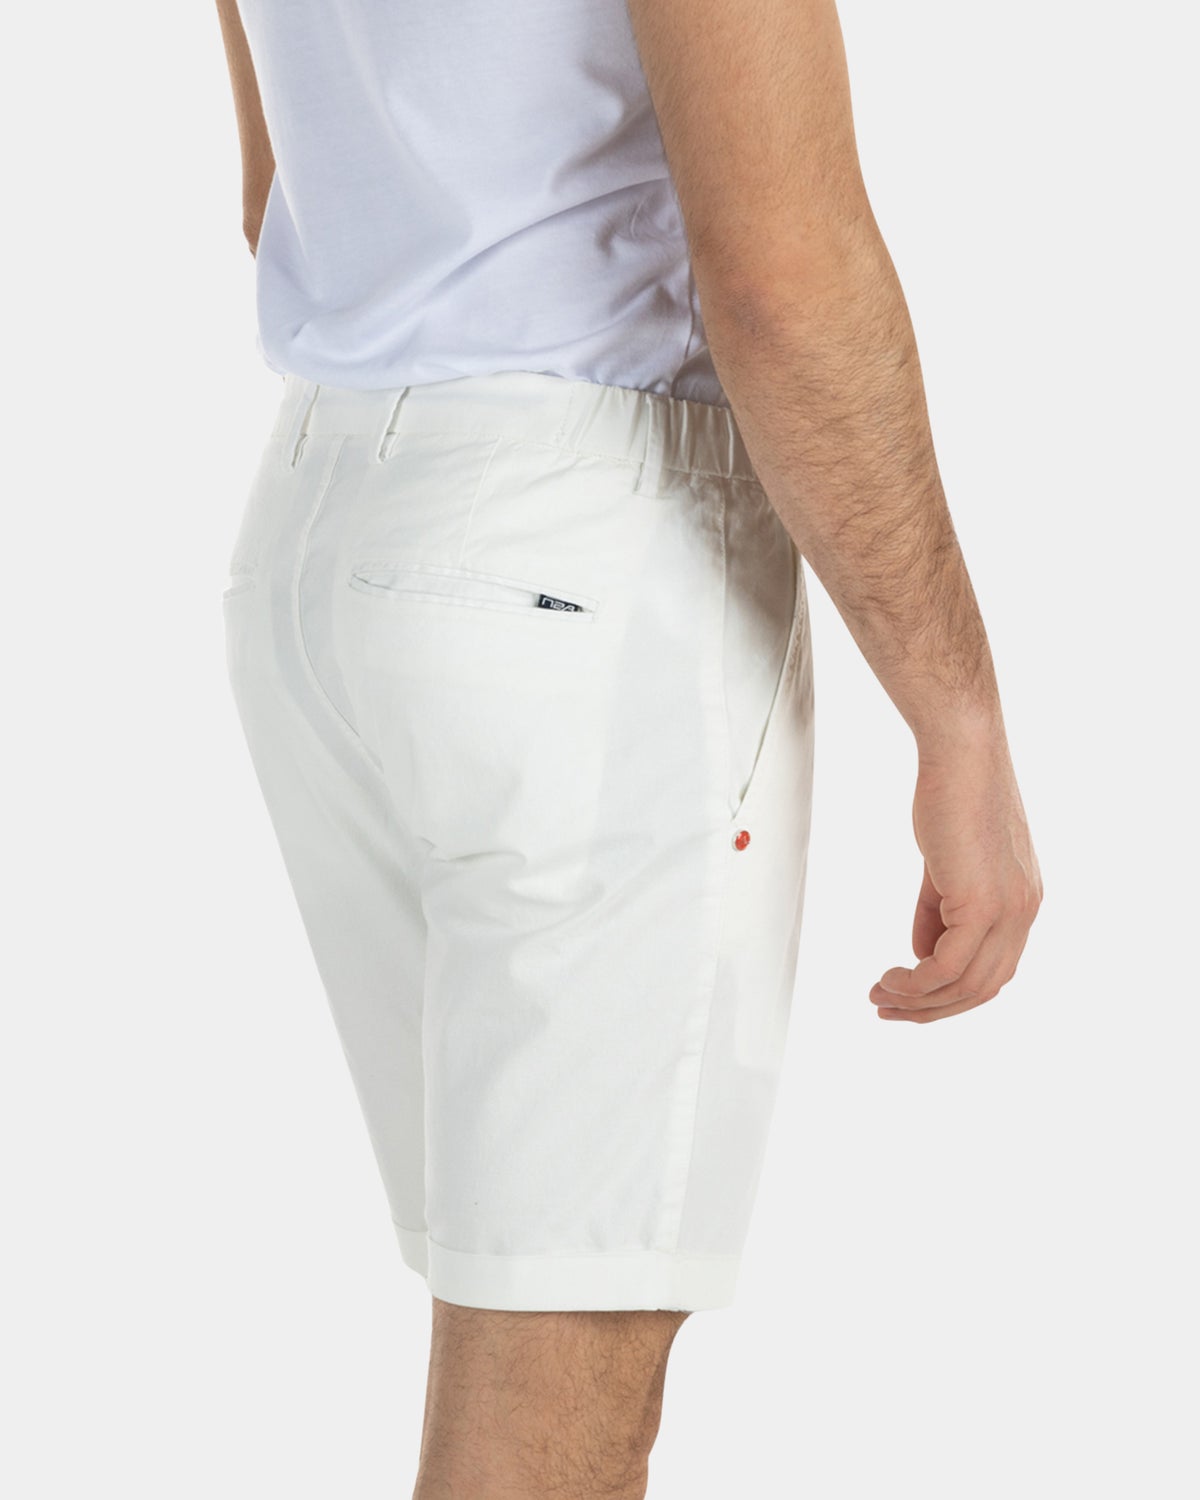 White cotton chino shorts - Cream